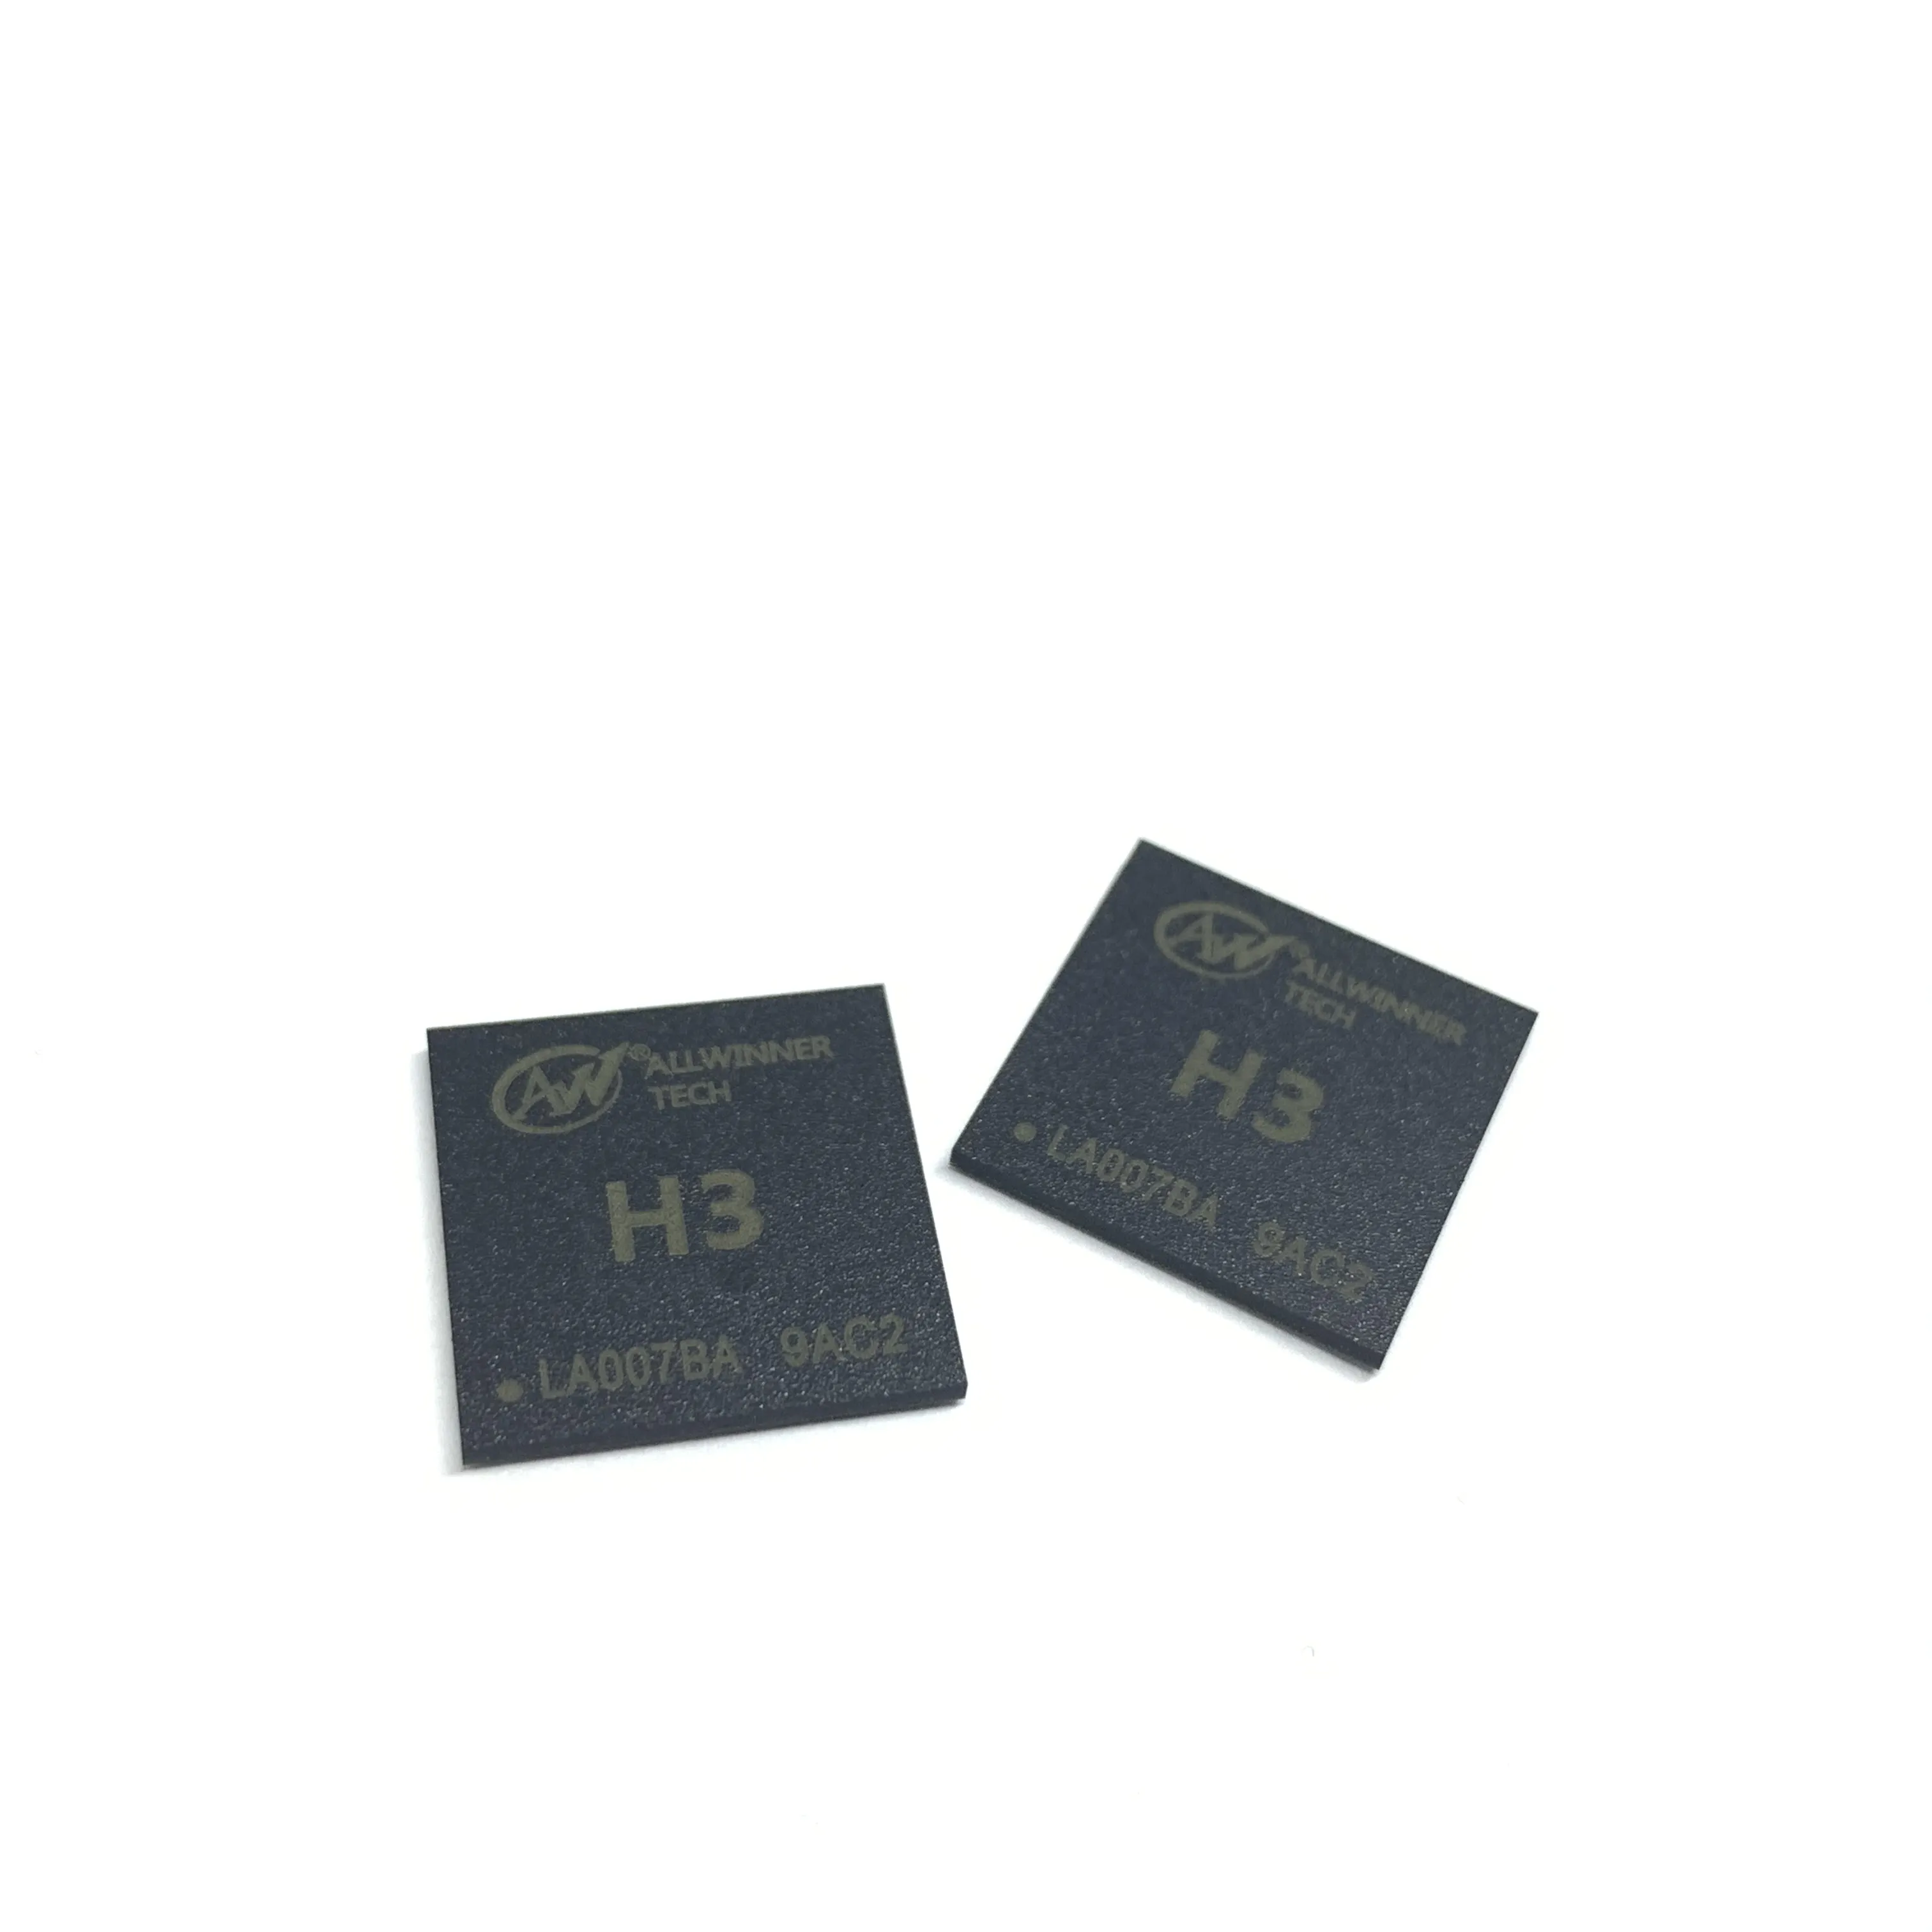 Merrillchip Original stock ALLWINNER H3 Quad-core CPU quad-core smart Processor H3 IC Chip electronic component